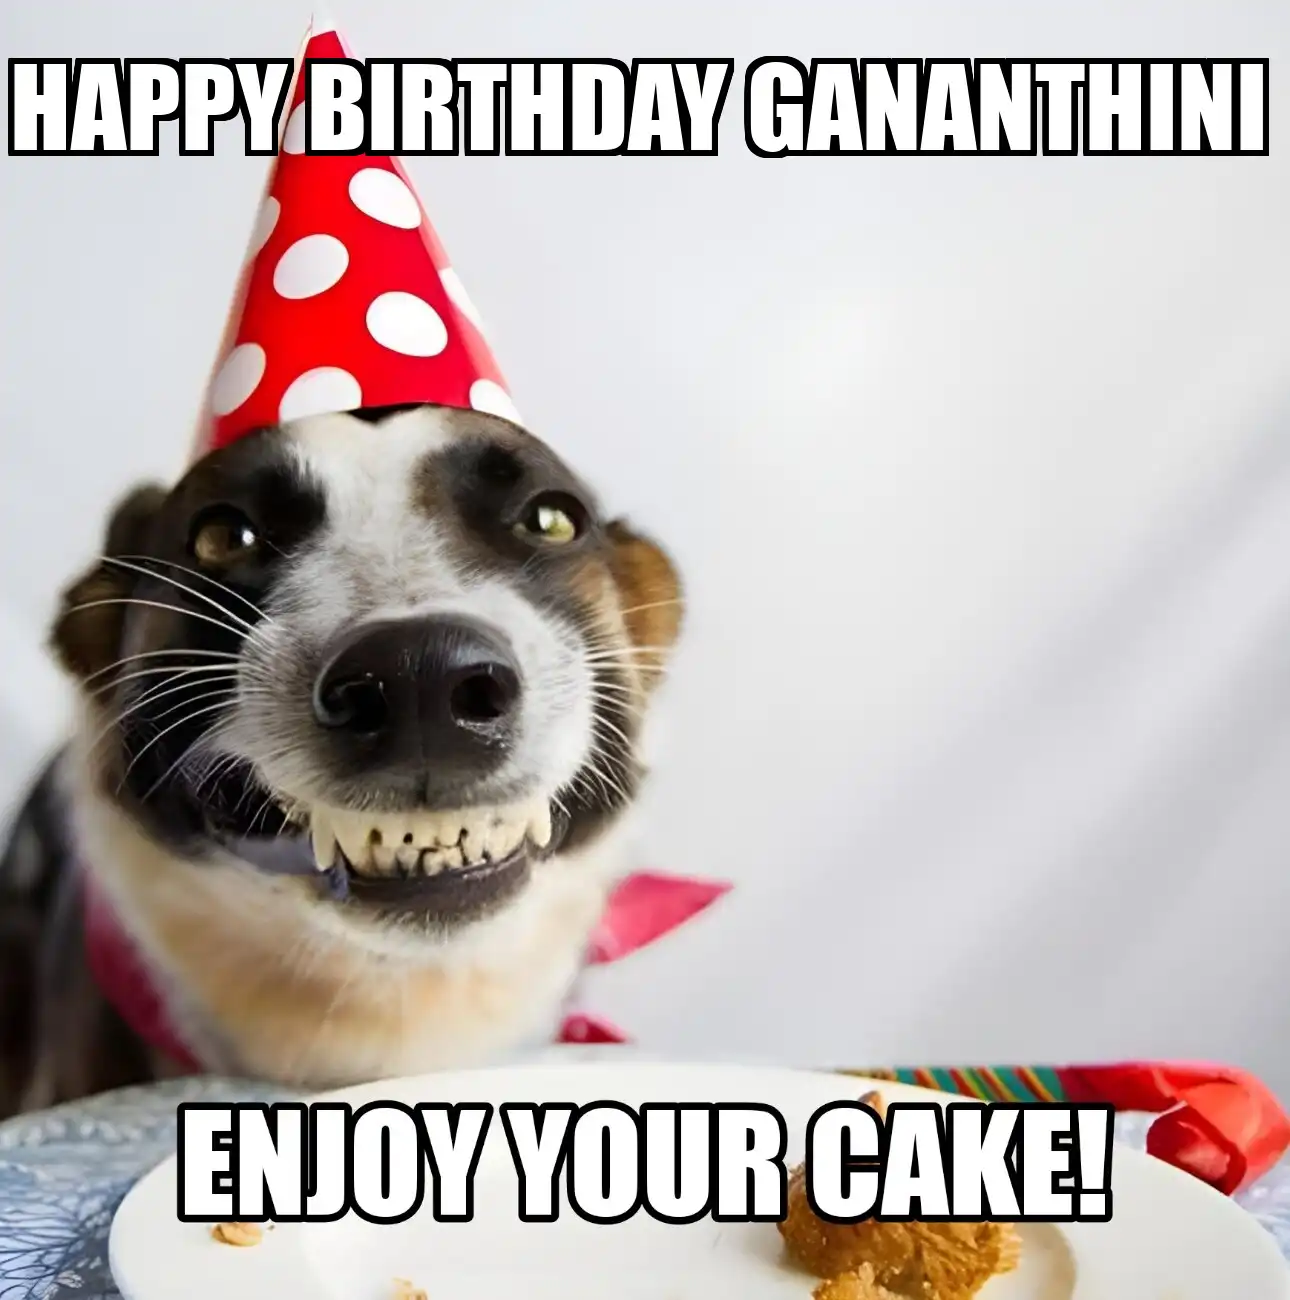 Happy Birthday Gananthini Enjoy Your Cake Dog Meme